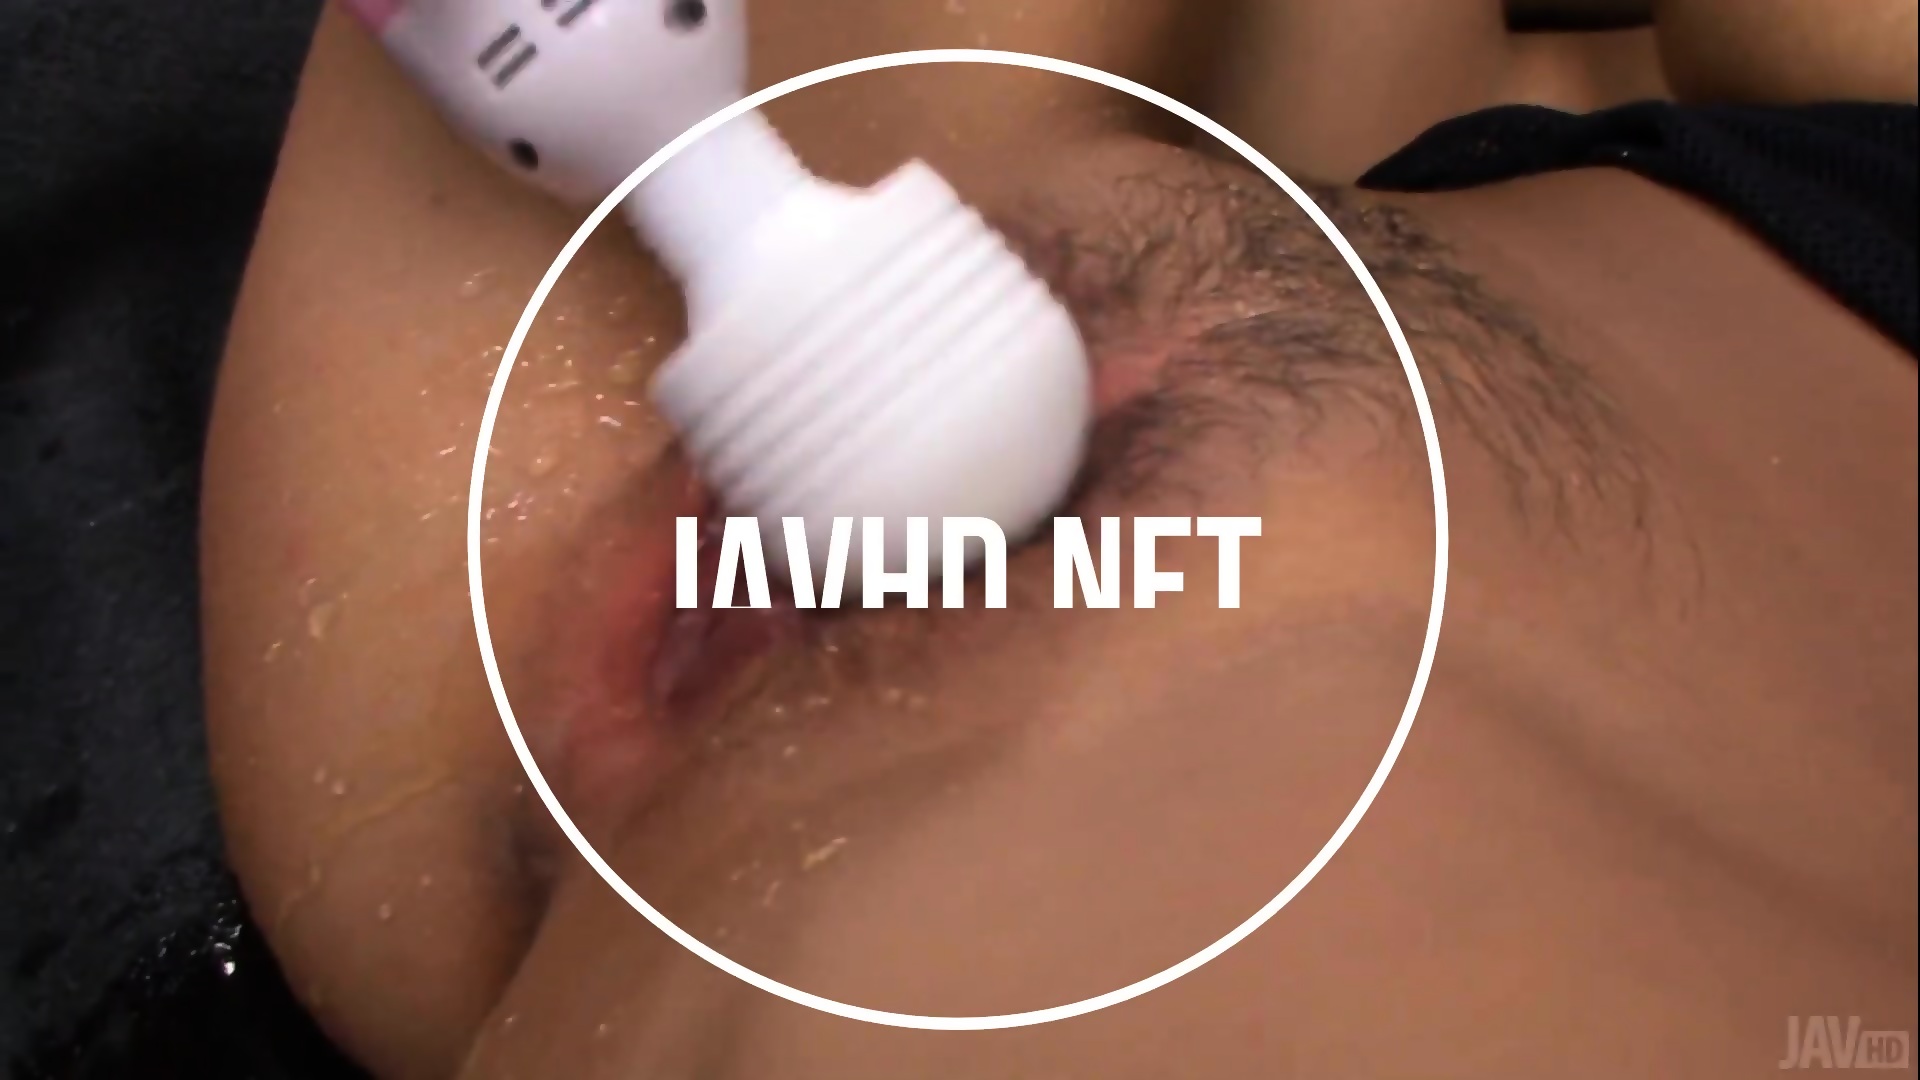 Japanese Tits Vol 6 On Javhd Net Eporner